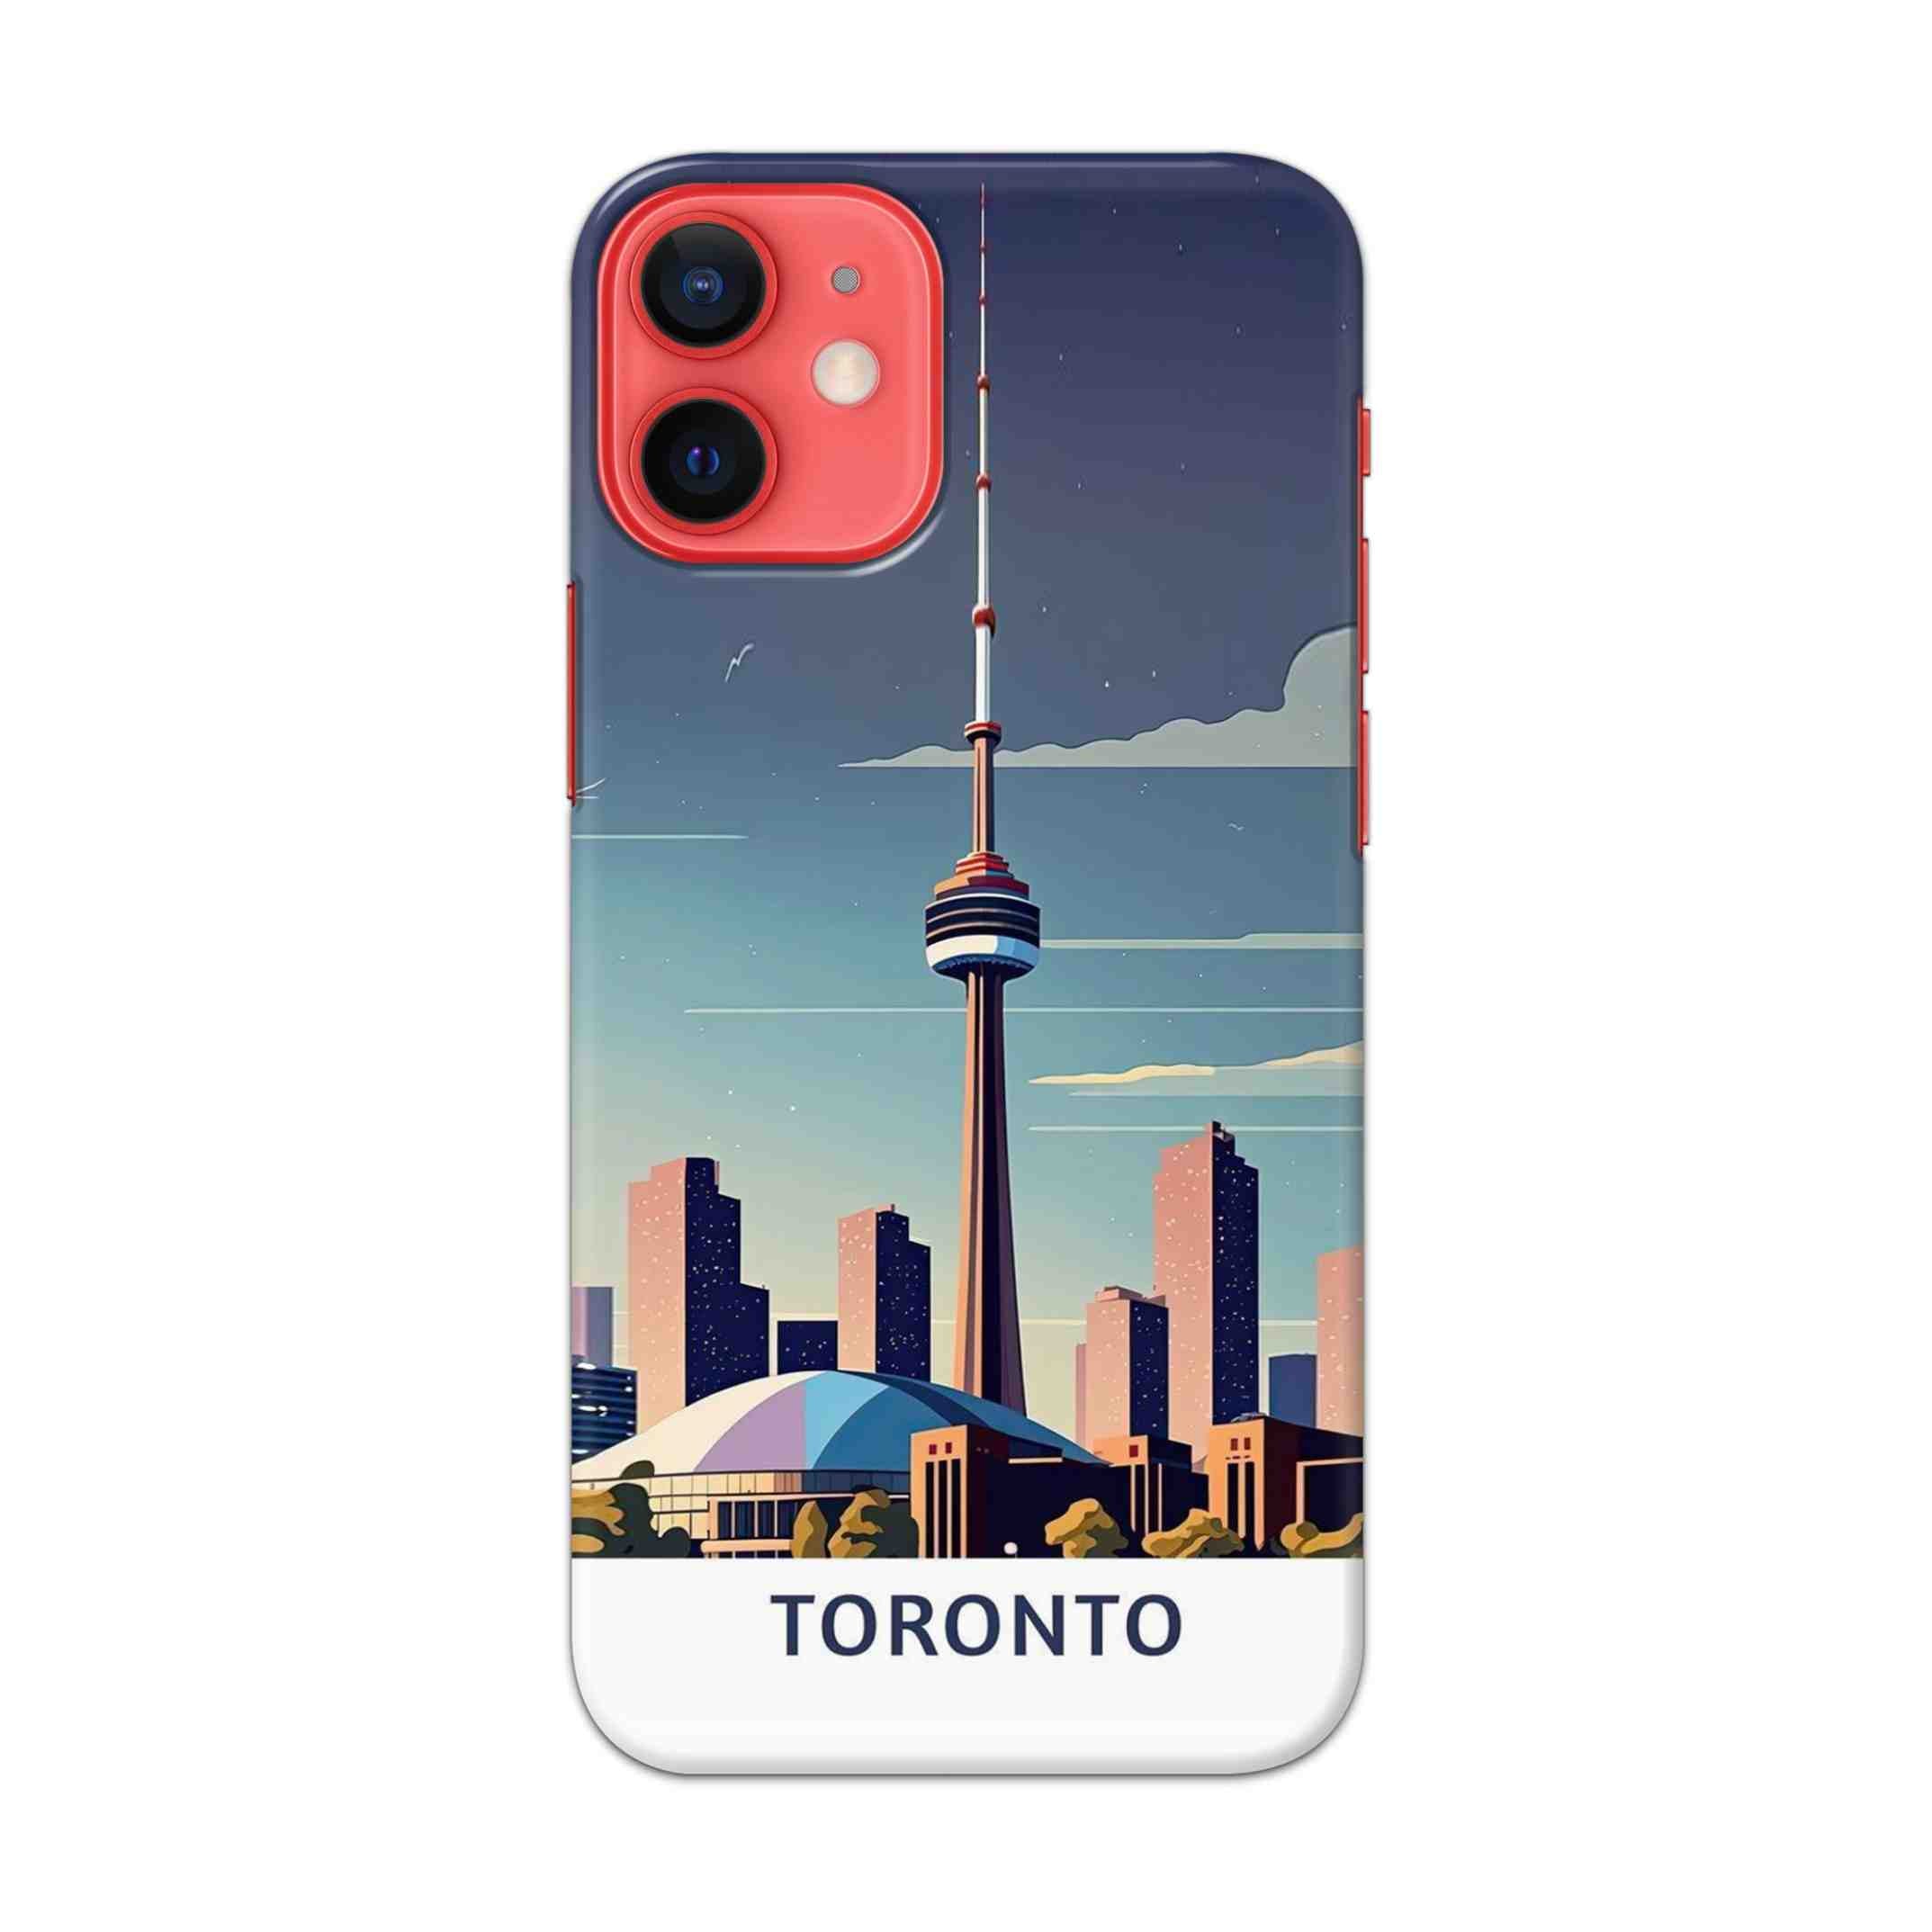 Buy Toronto Hard Back Mobile Phone Case/Cover For Apple iPhone 12 mini Online